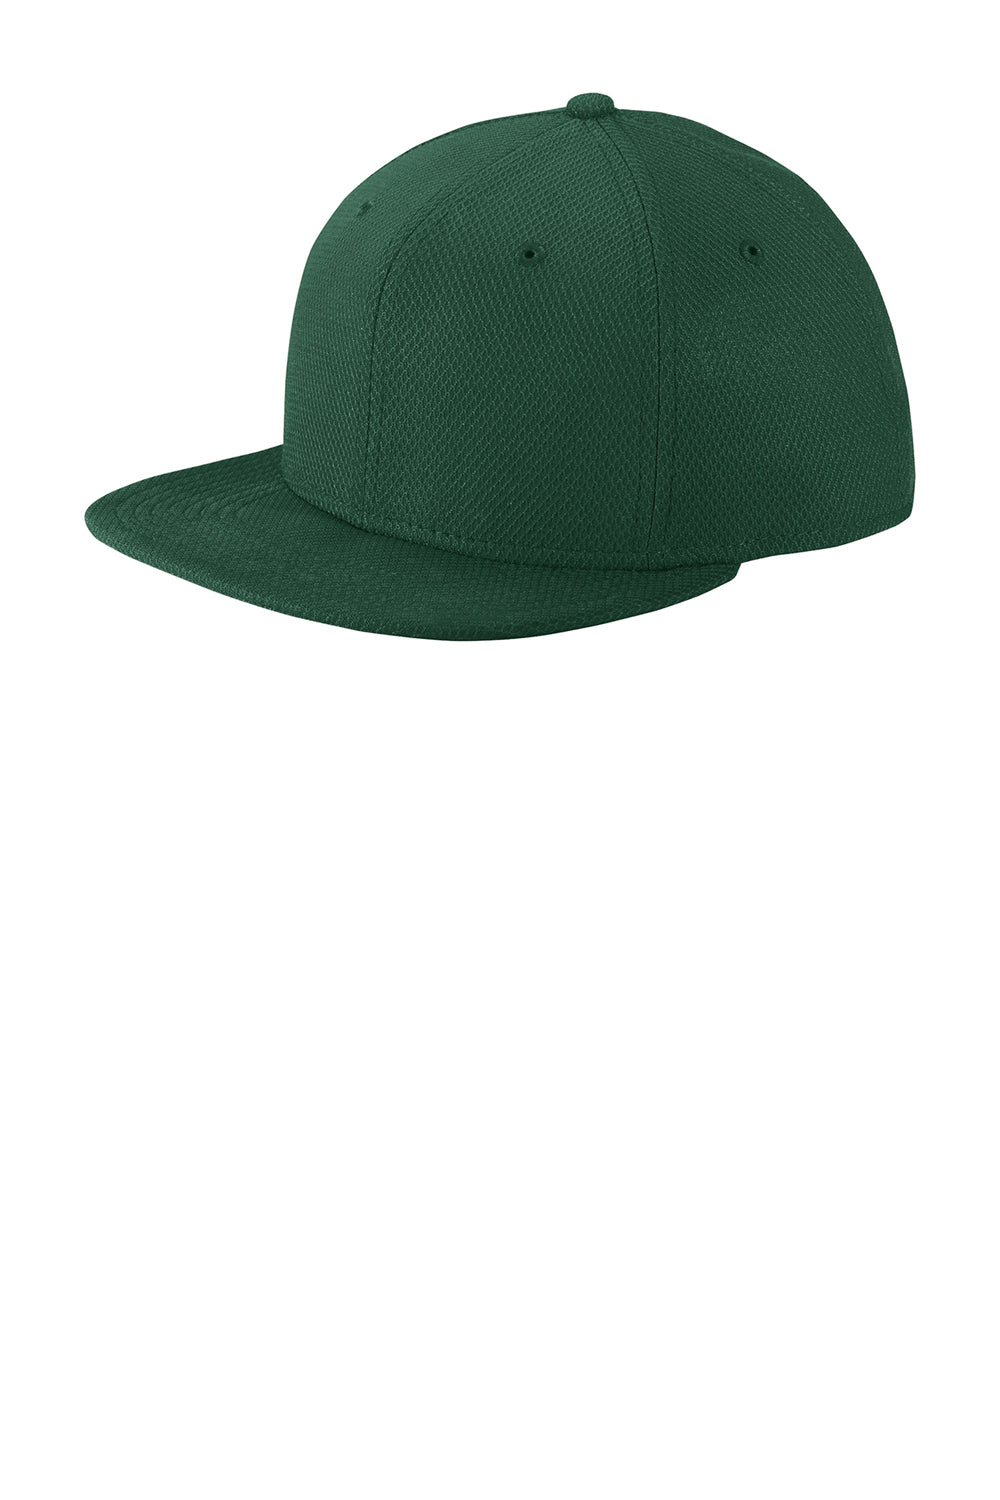 New Era NE404 Mens Moisture Wicking Adjustable Hat Forest Green Front